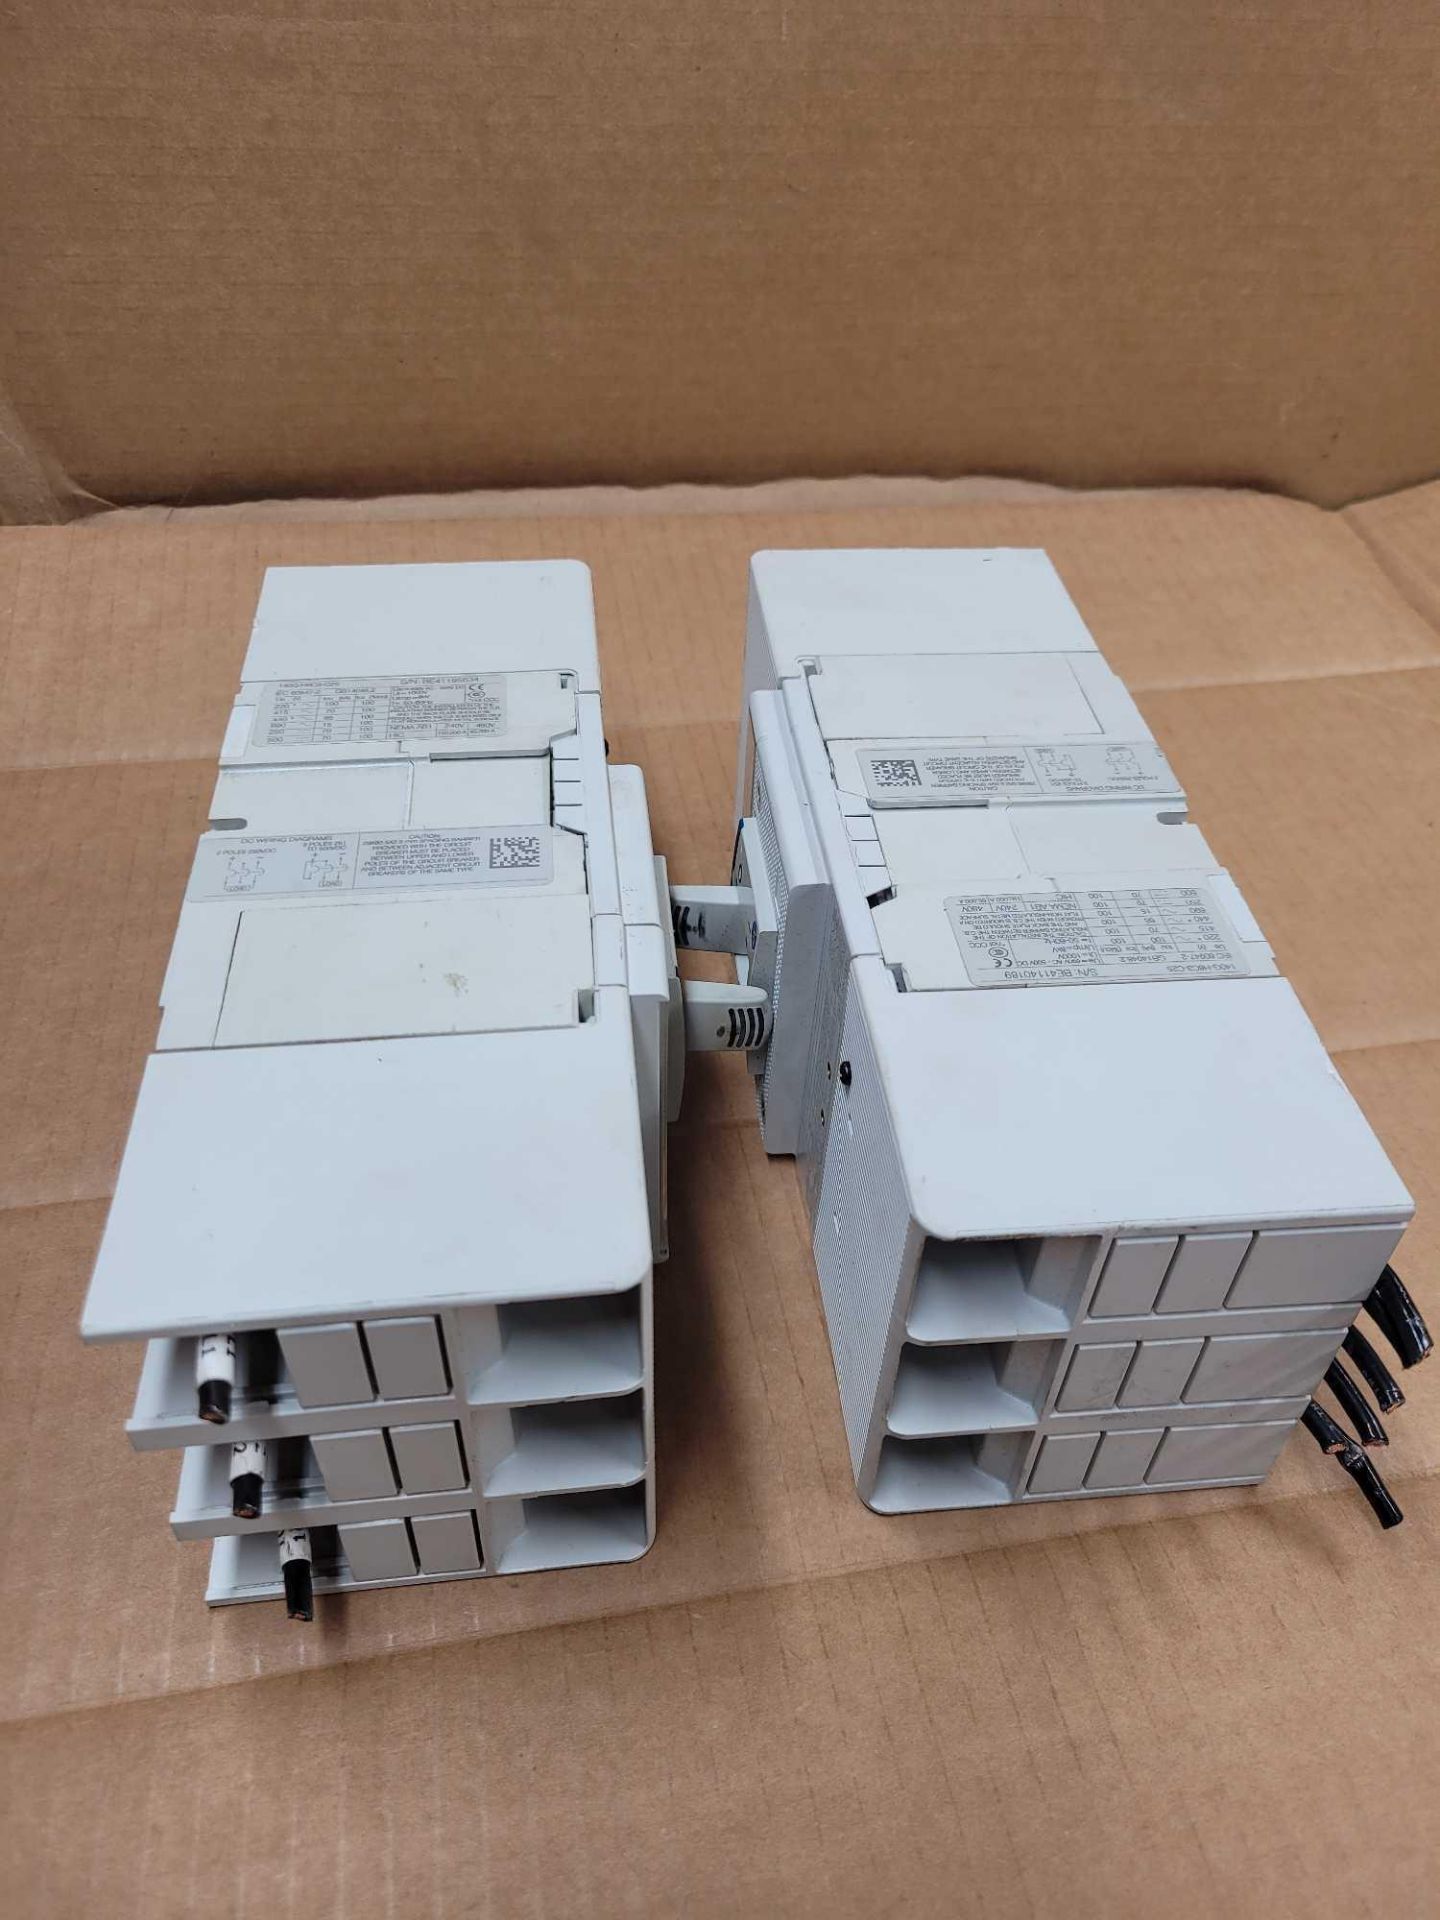 LOT OF 2 ALLEN BRADLEY 140G-H6C3-C25-FB / Series A 25 Amp Circuit Breaker  /  Lot Weight: 8.8 lbs - Image 4 of 6